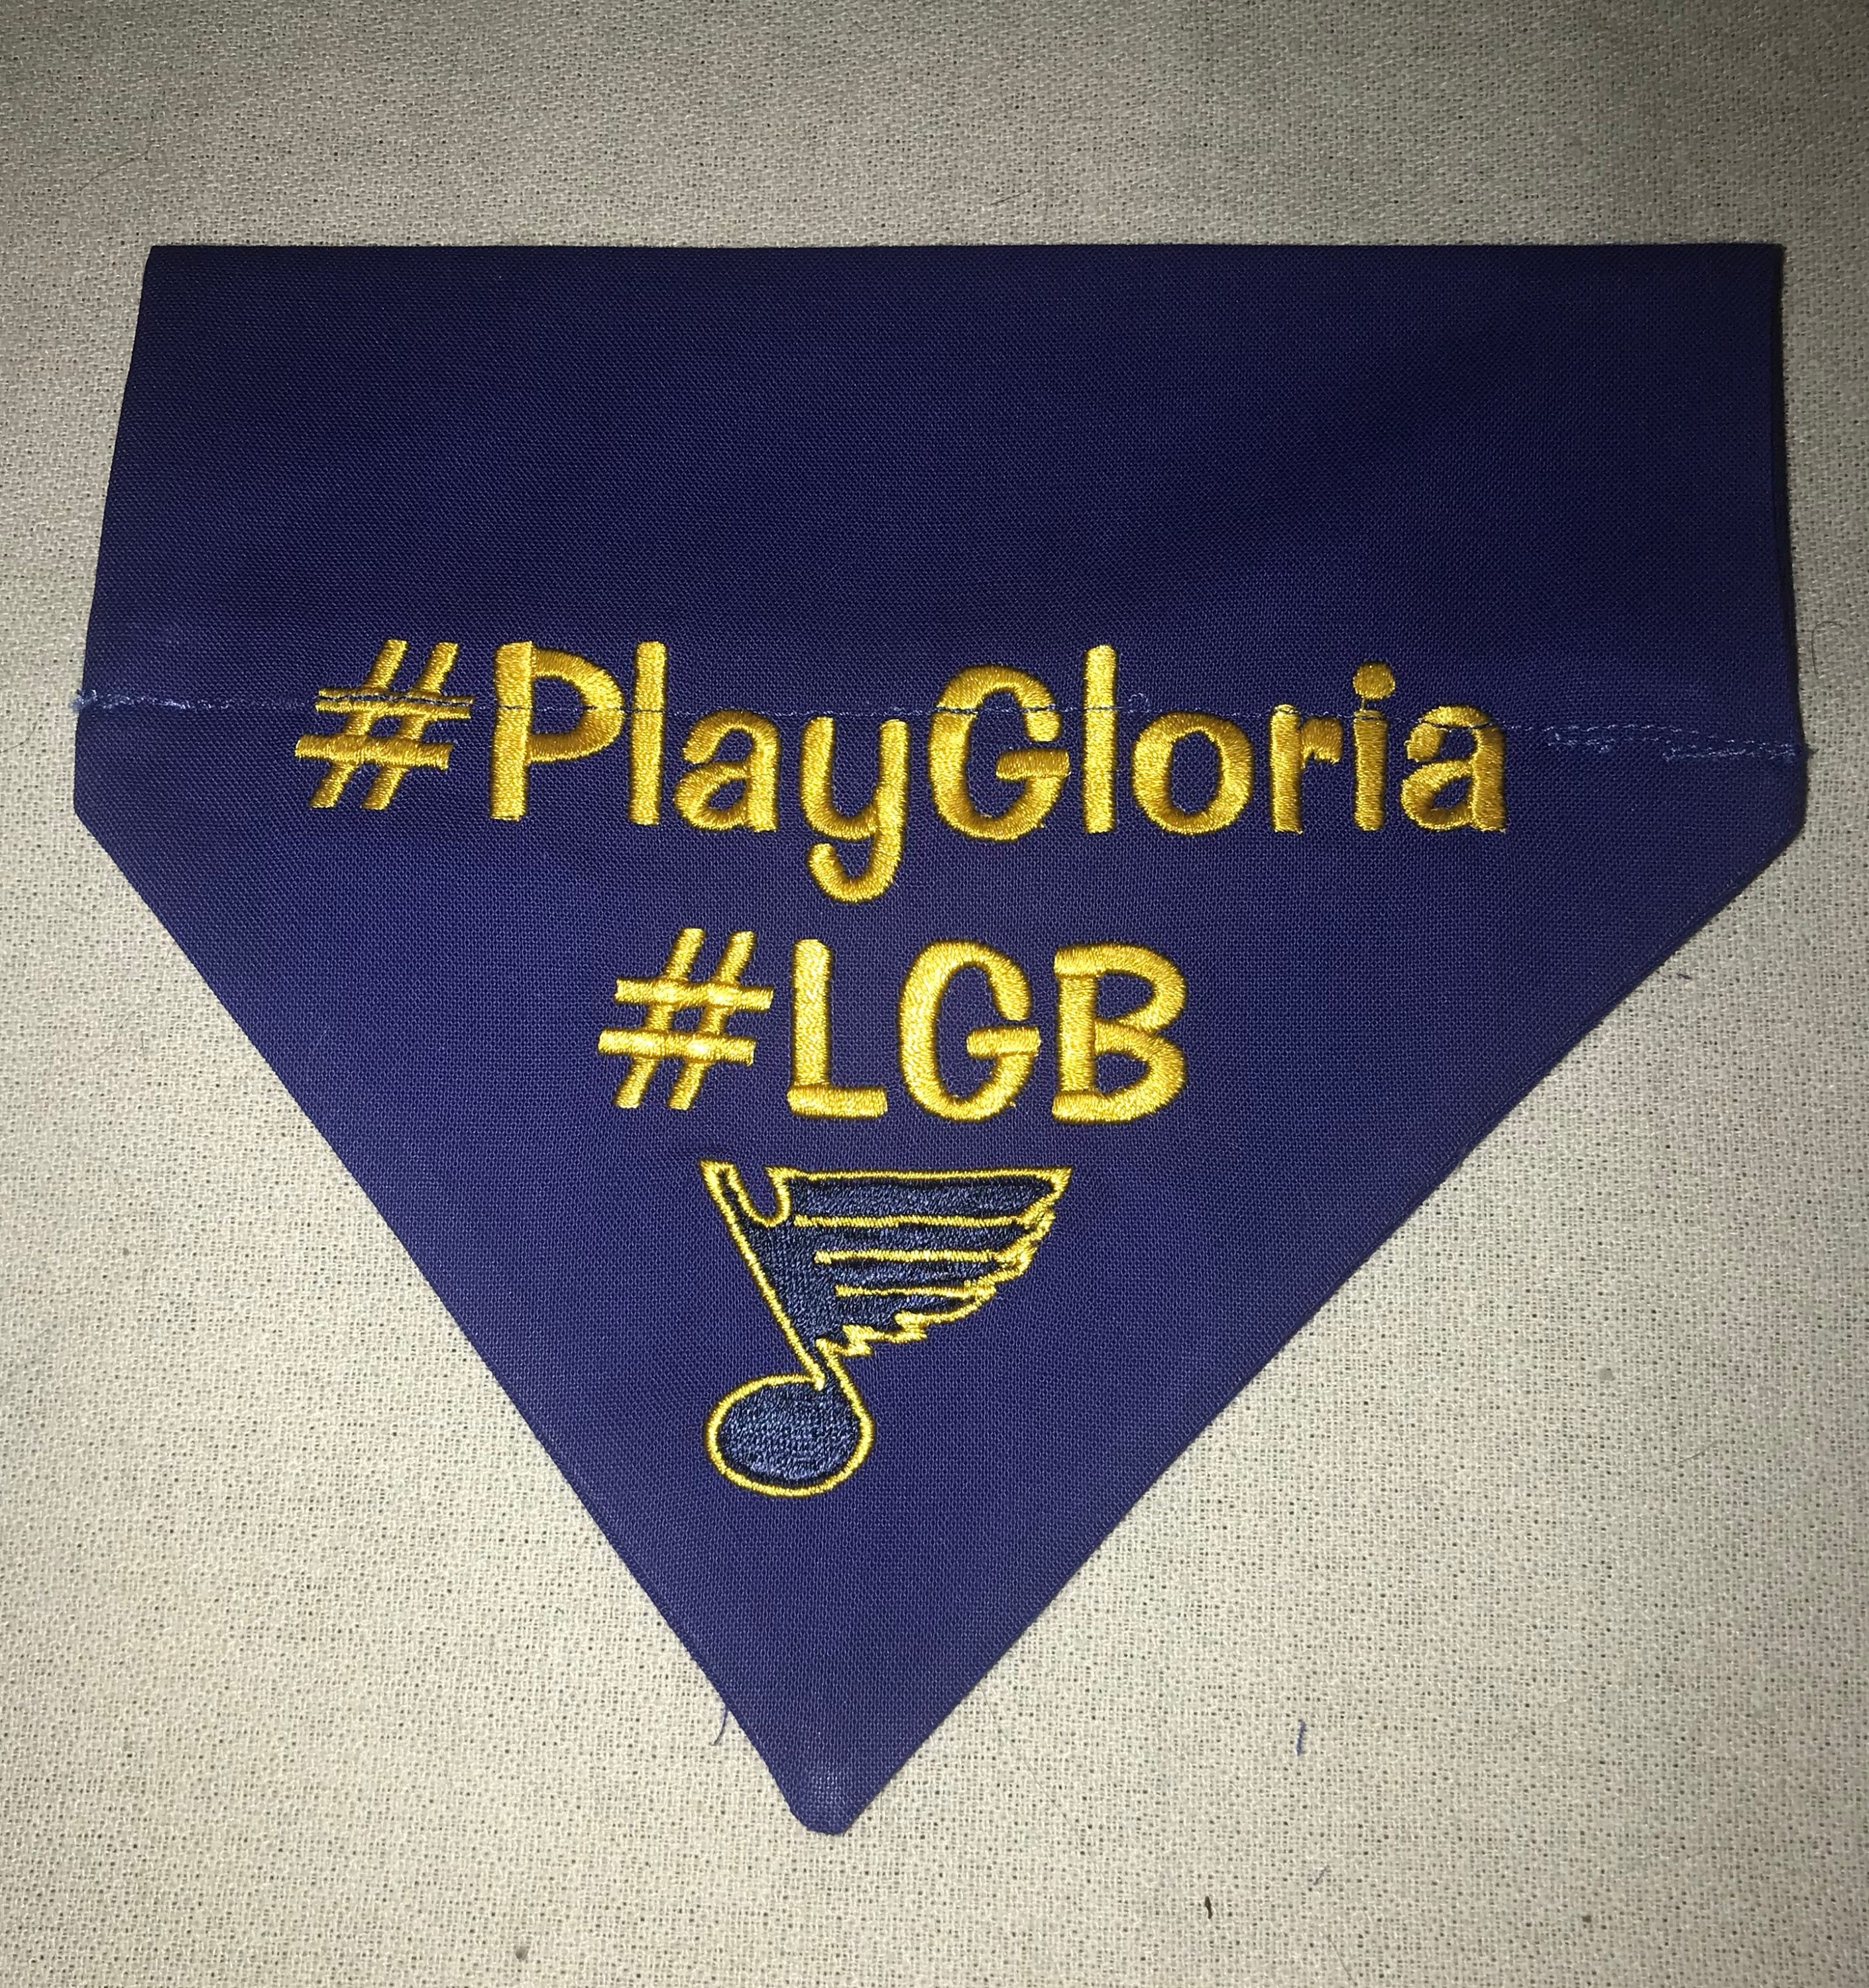 Hashtag play Gloria St. Louis Blues Bandana 